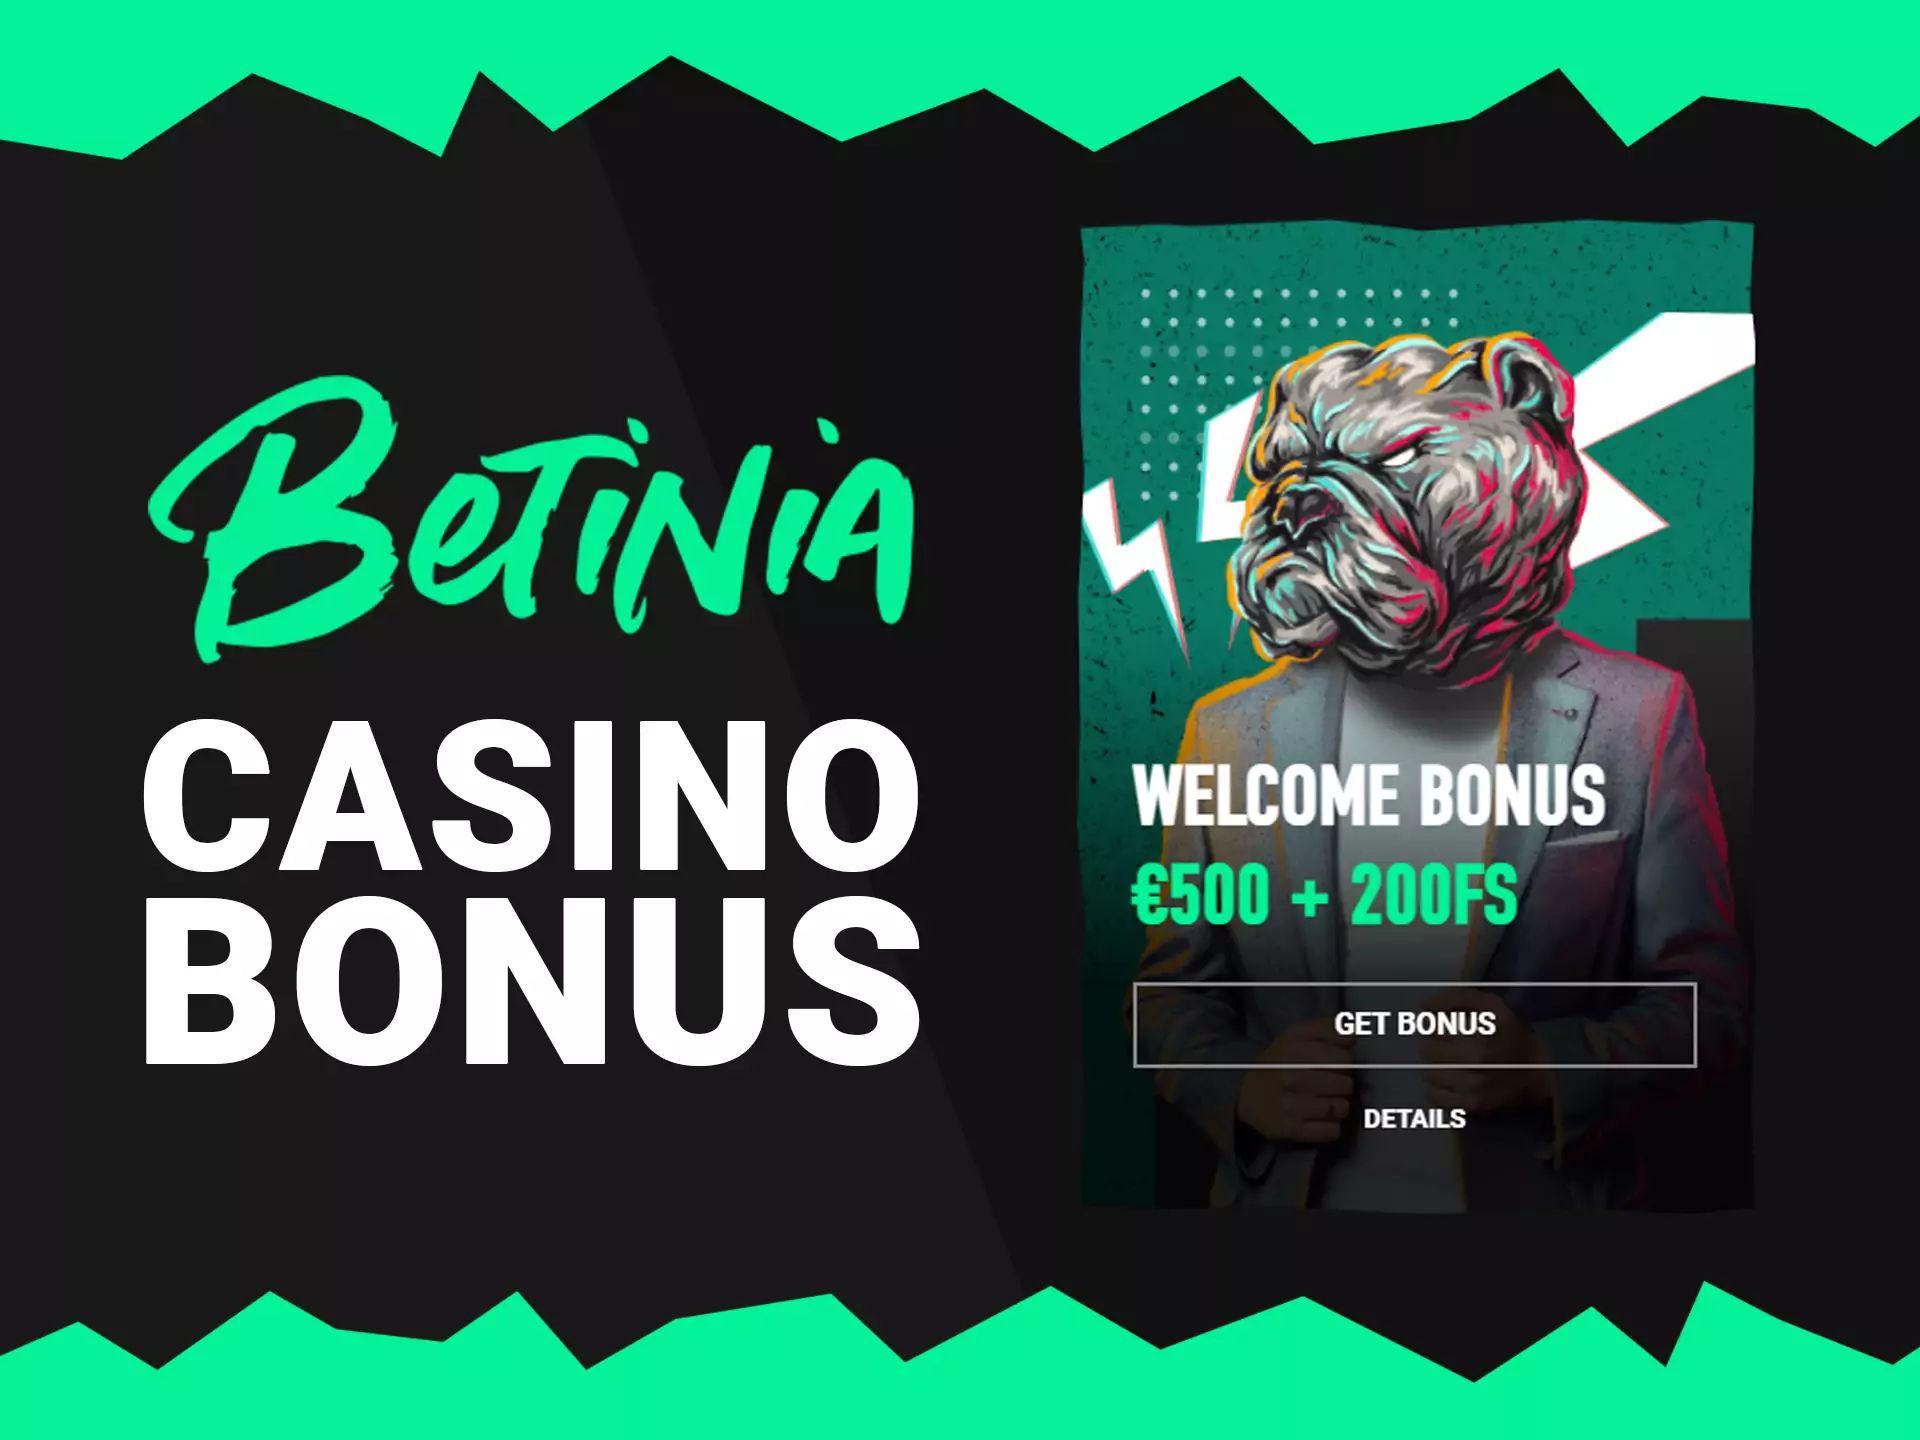 Get casino bonus after succesfull registration.